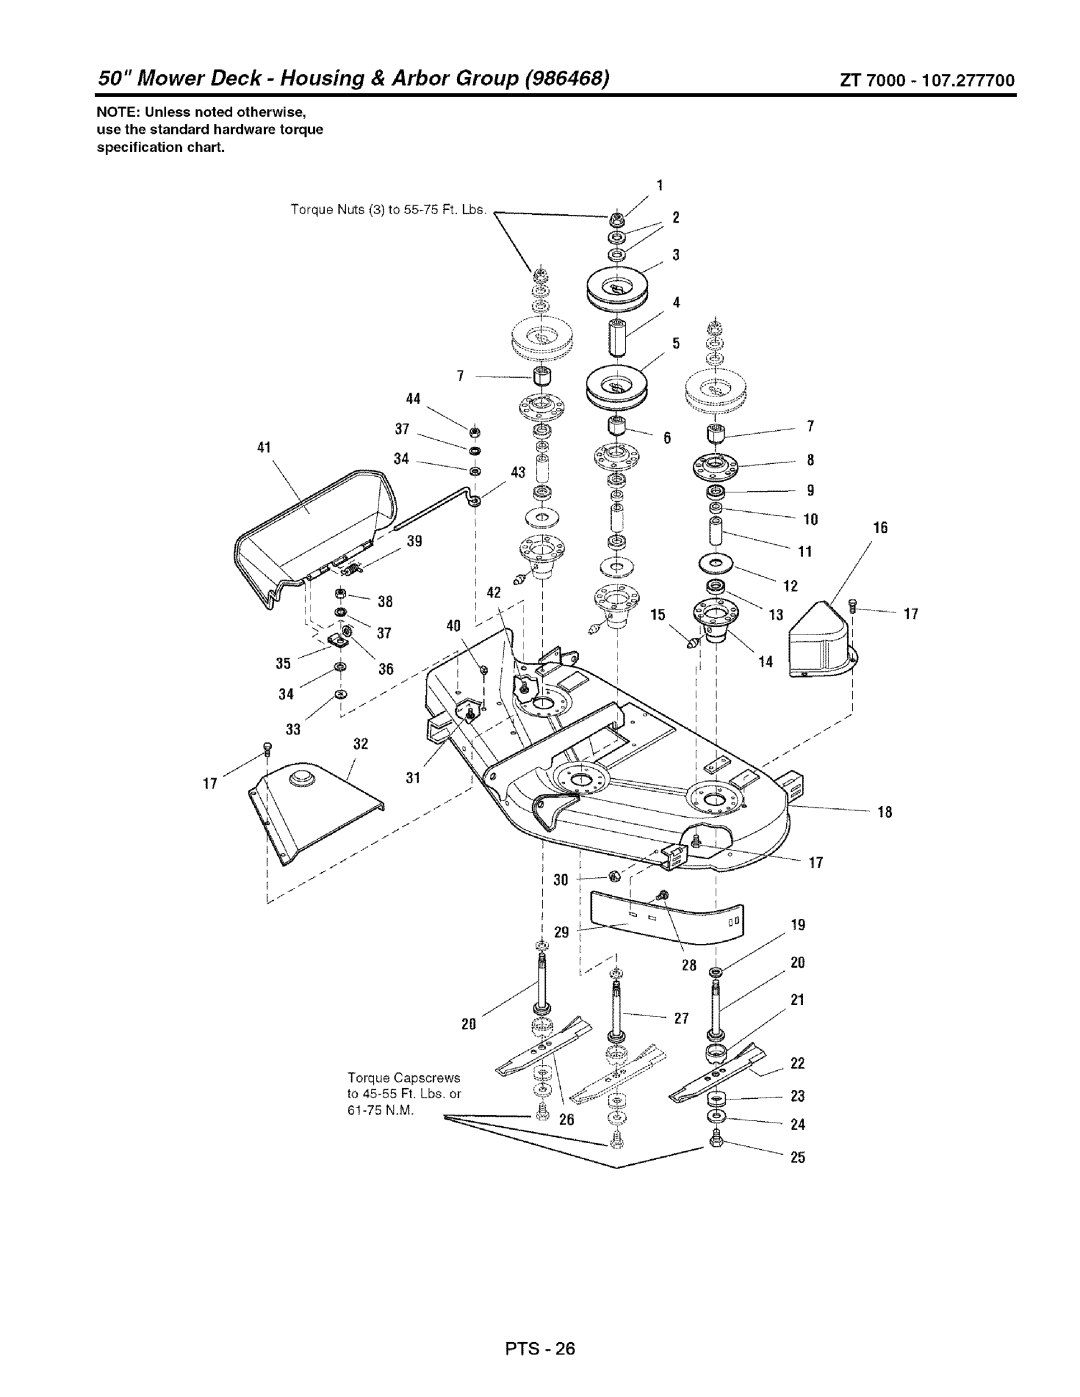 Craftsman 107.2777 manual Mower Deck - Housing & Arbor Group, ZT 7000, 2 3 41, I I I 